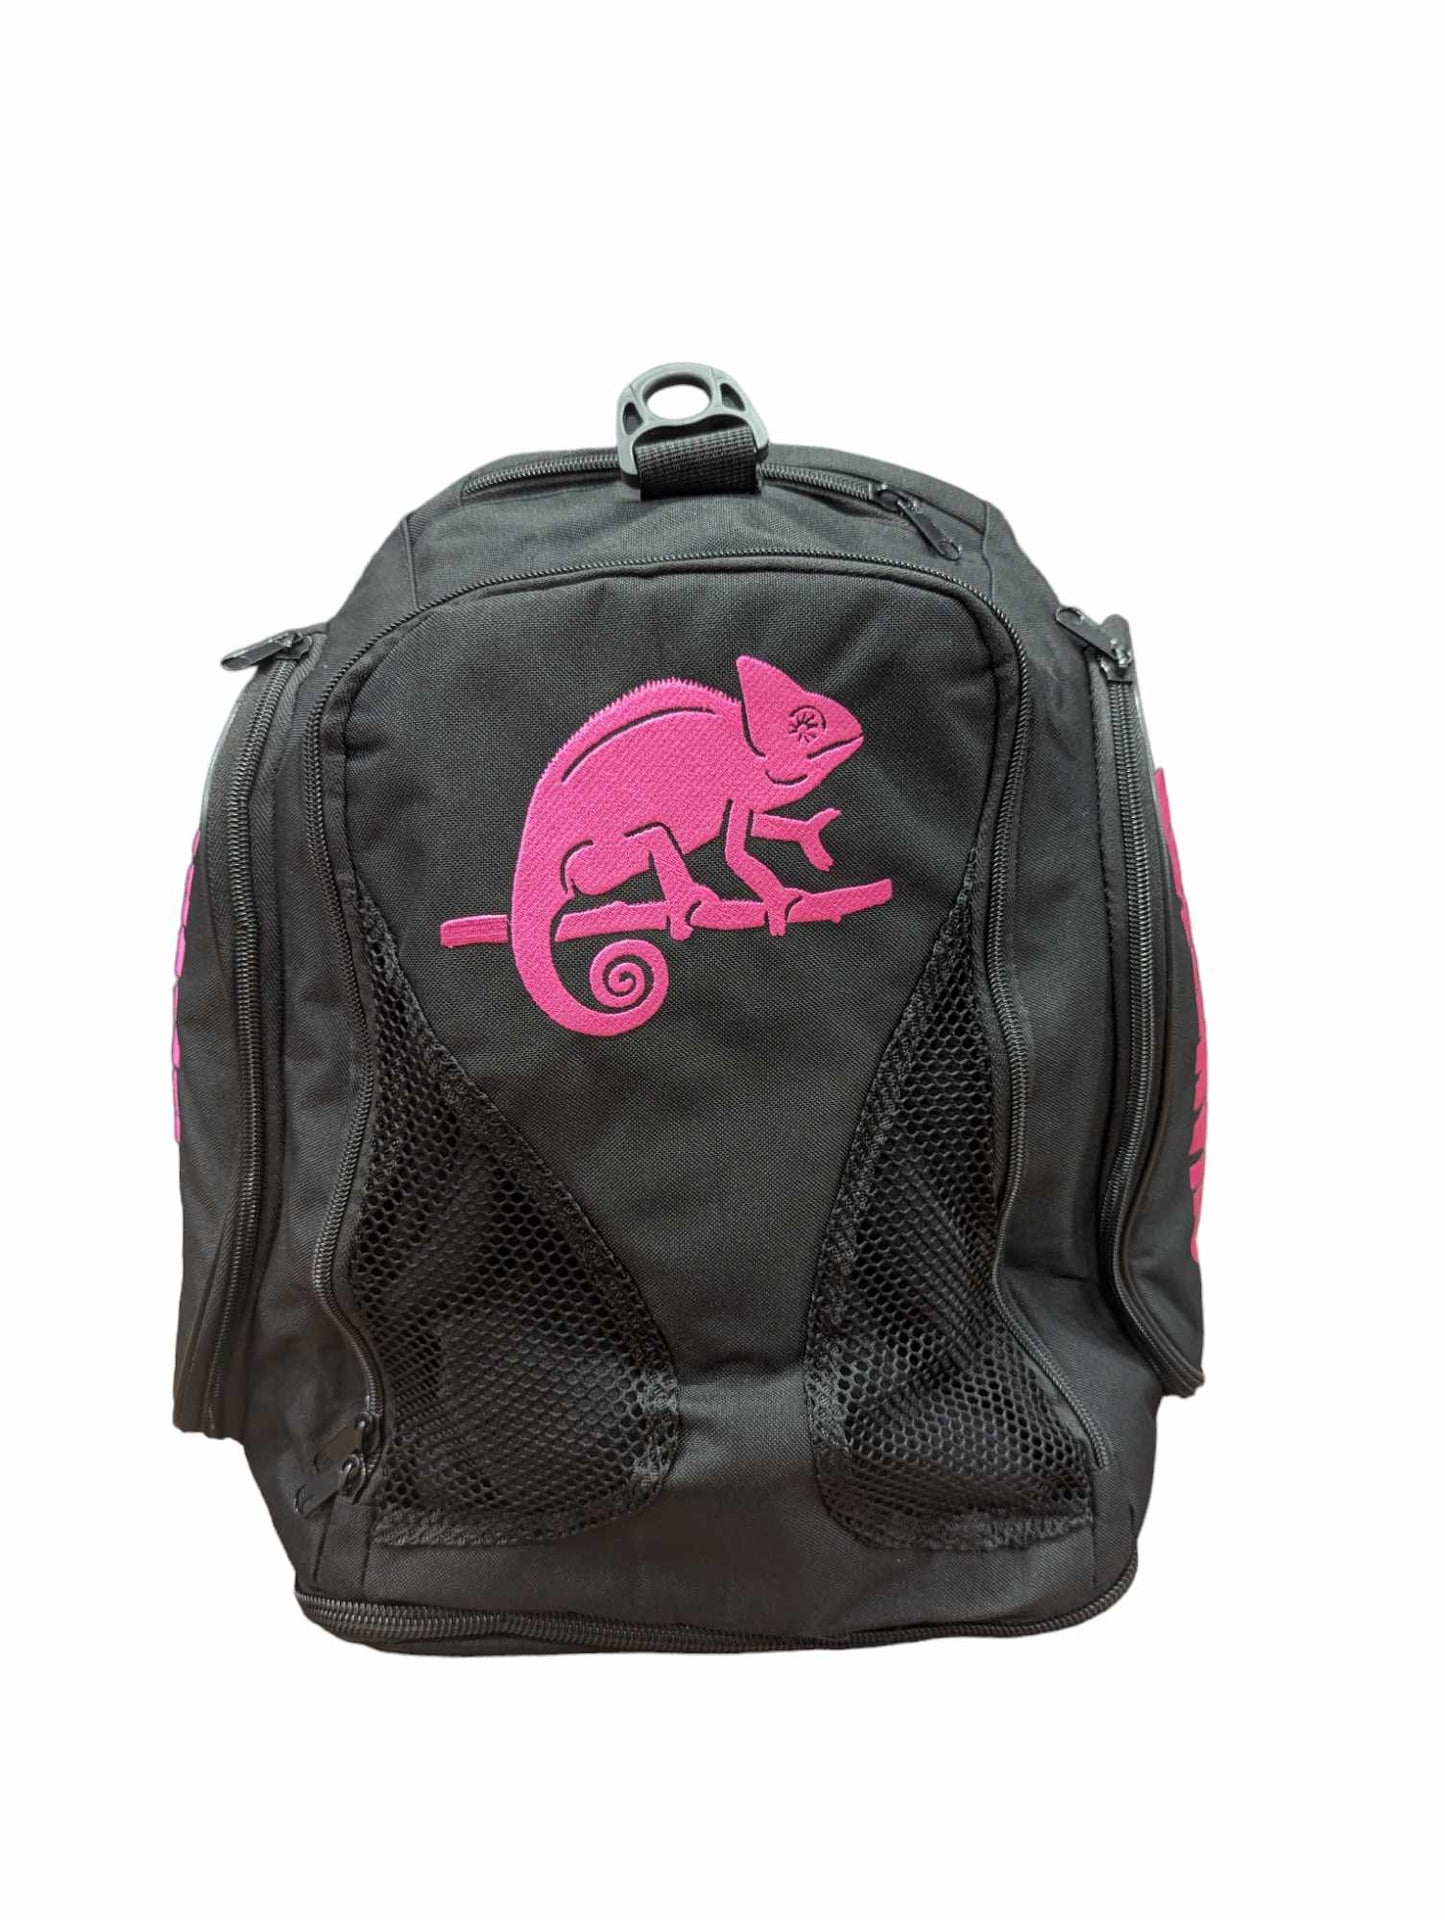 Chameleon Embroidered Backpack